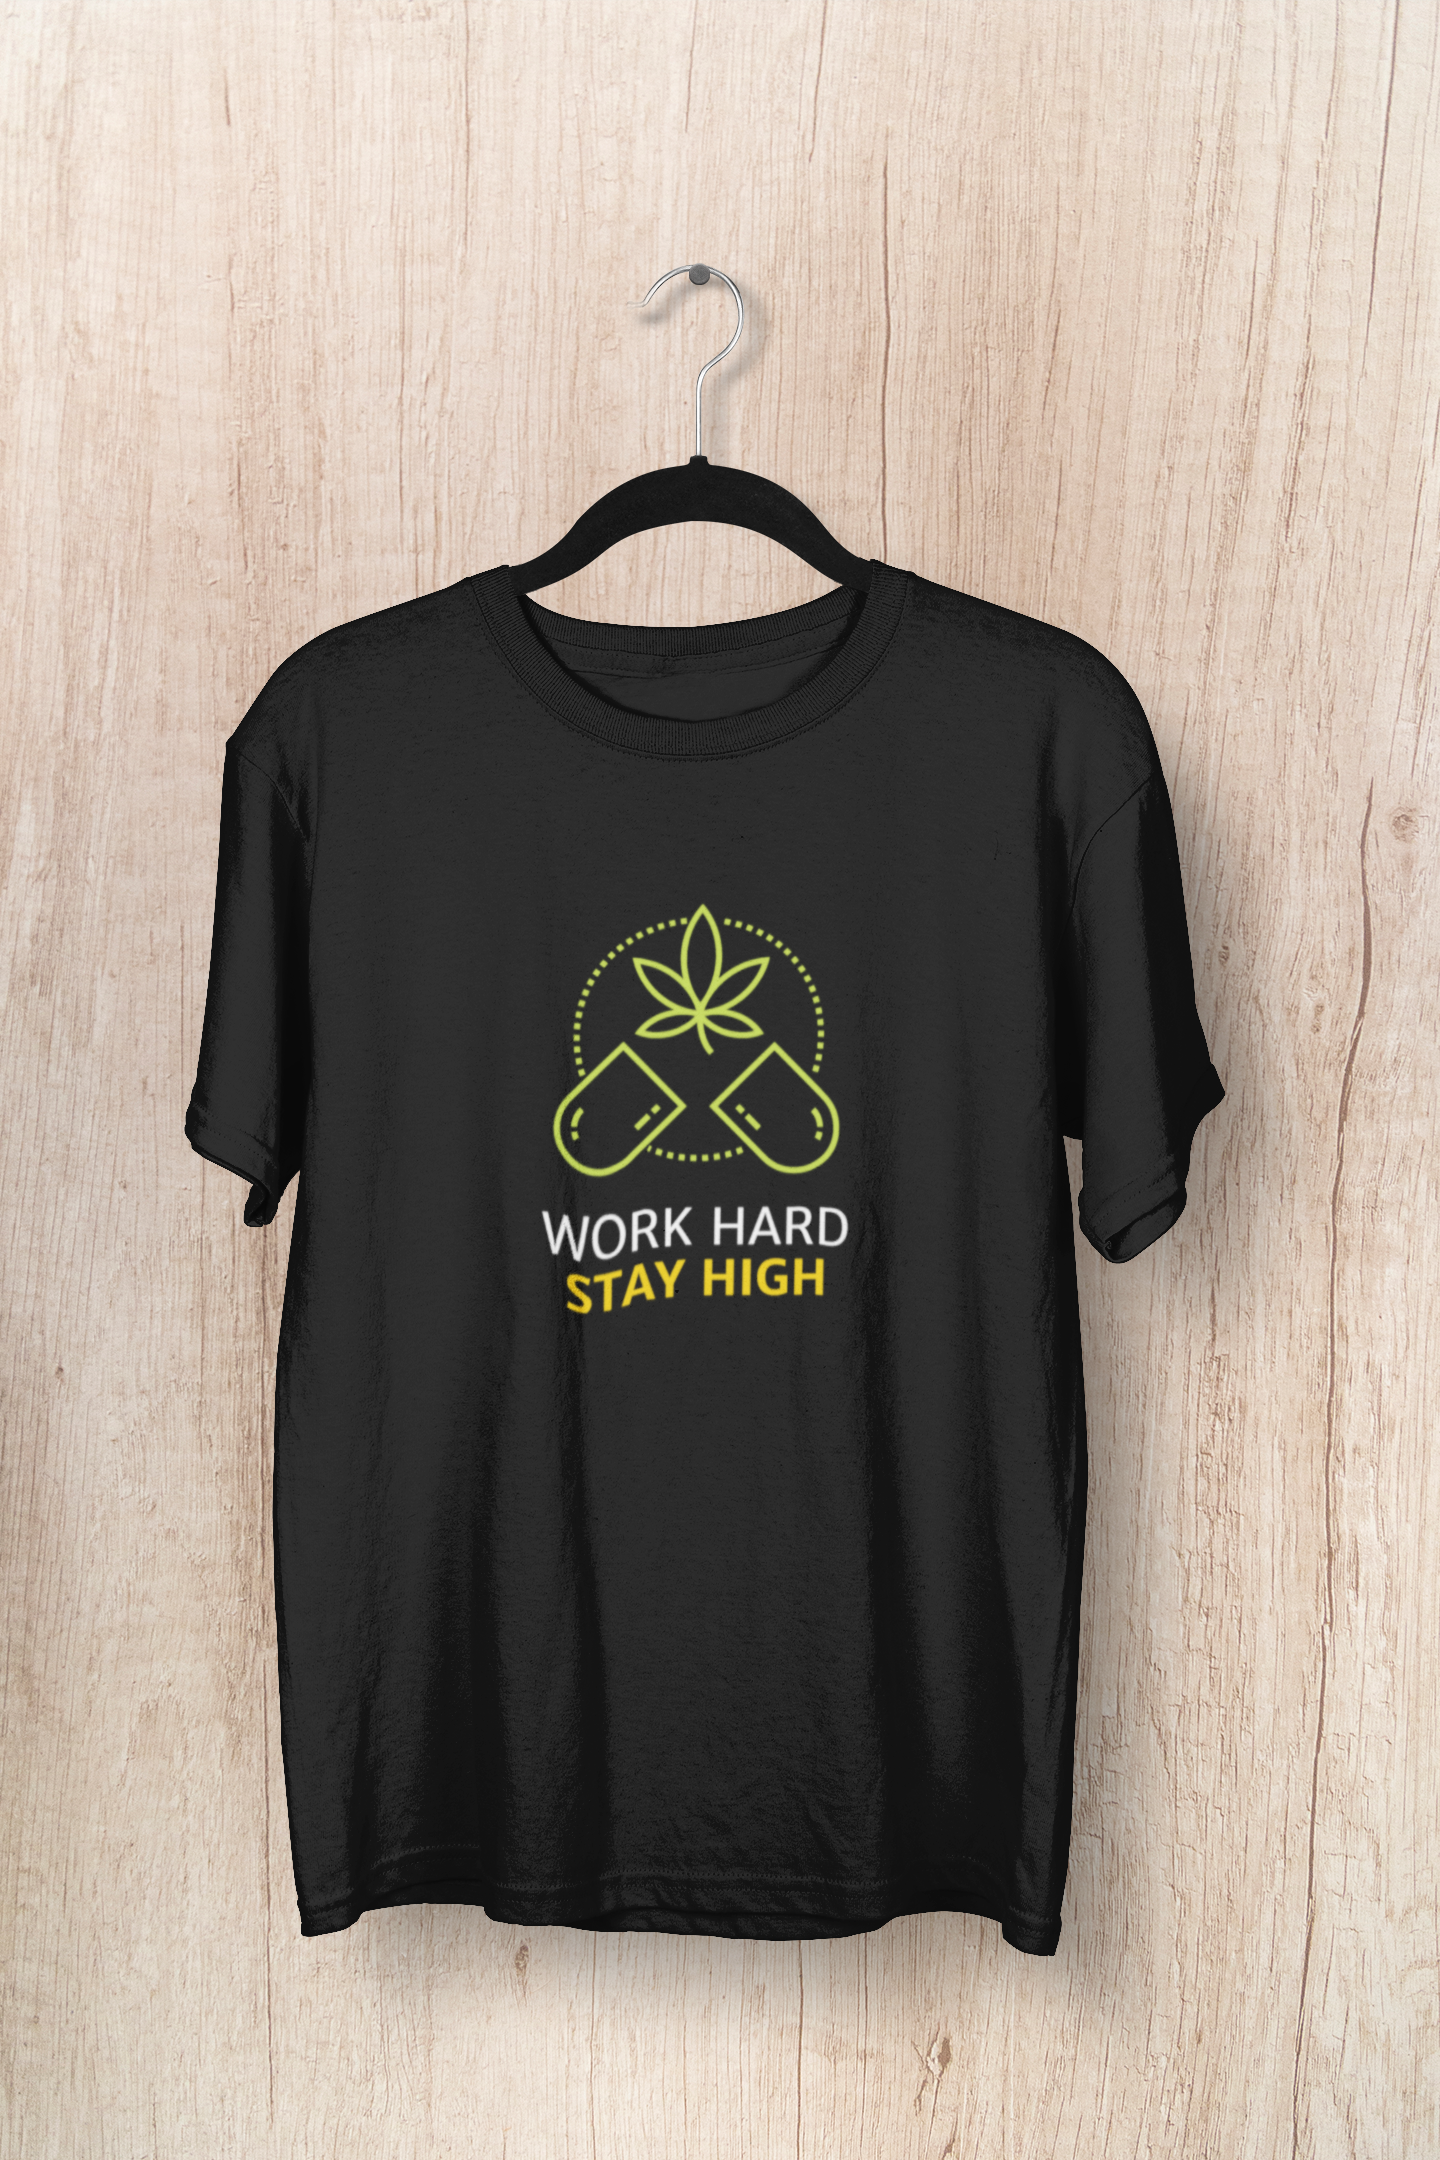 " WORK HARD, STAY HIGH " - HALF-SLEEVE T-SHIRT.